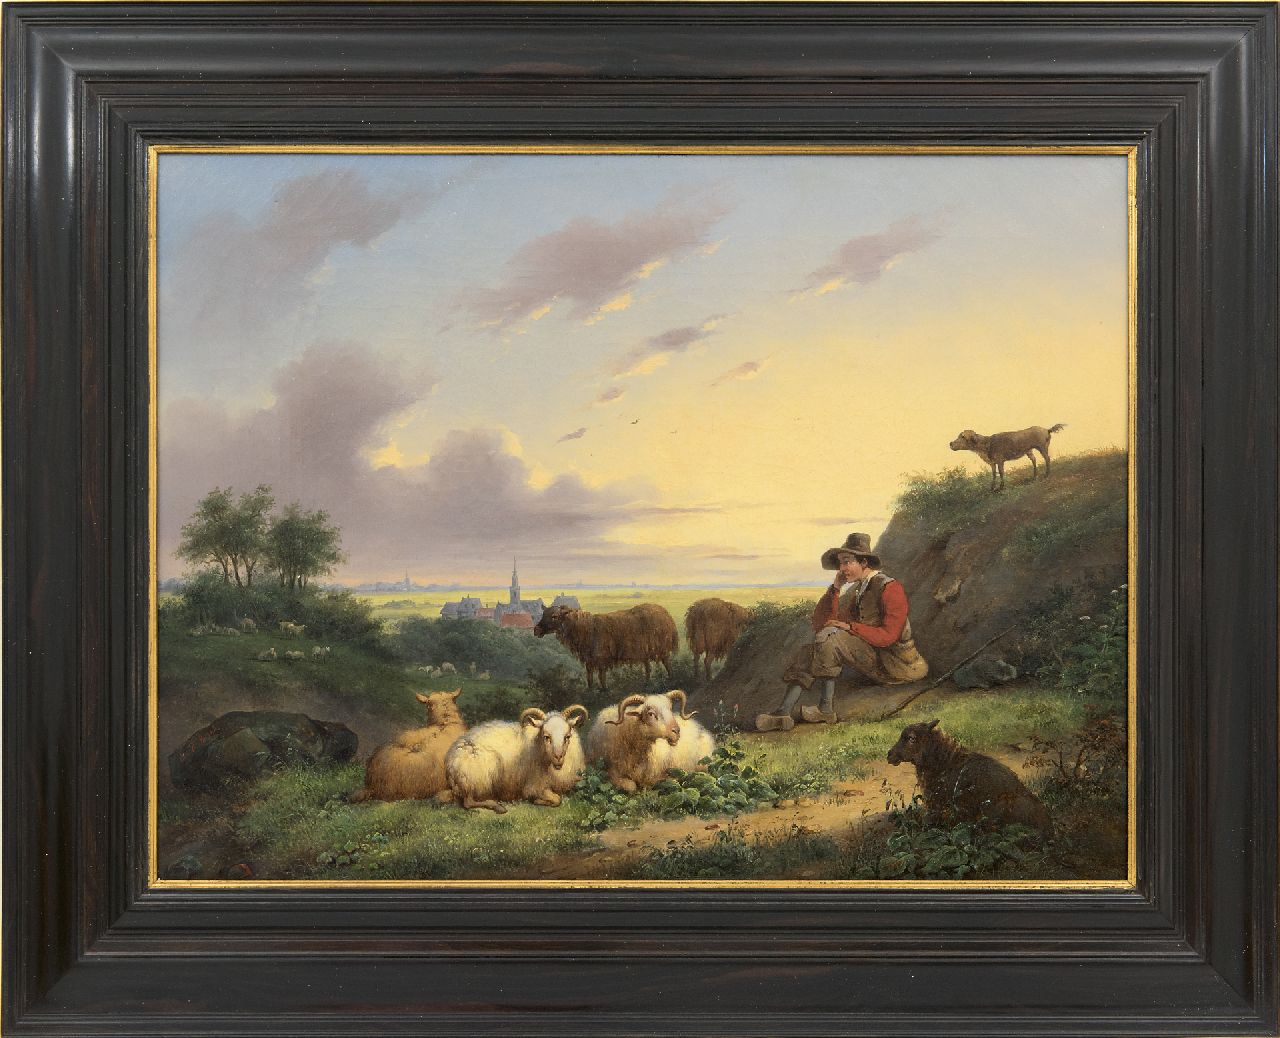 Berg S. van den | Simon van den Berg, A shepherd and his flock in a Dutch landscape, oil on canvas 42.2 x 56.1 cm, signed l.l. and painted ca. 1838